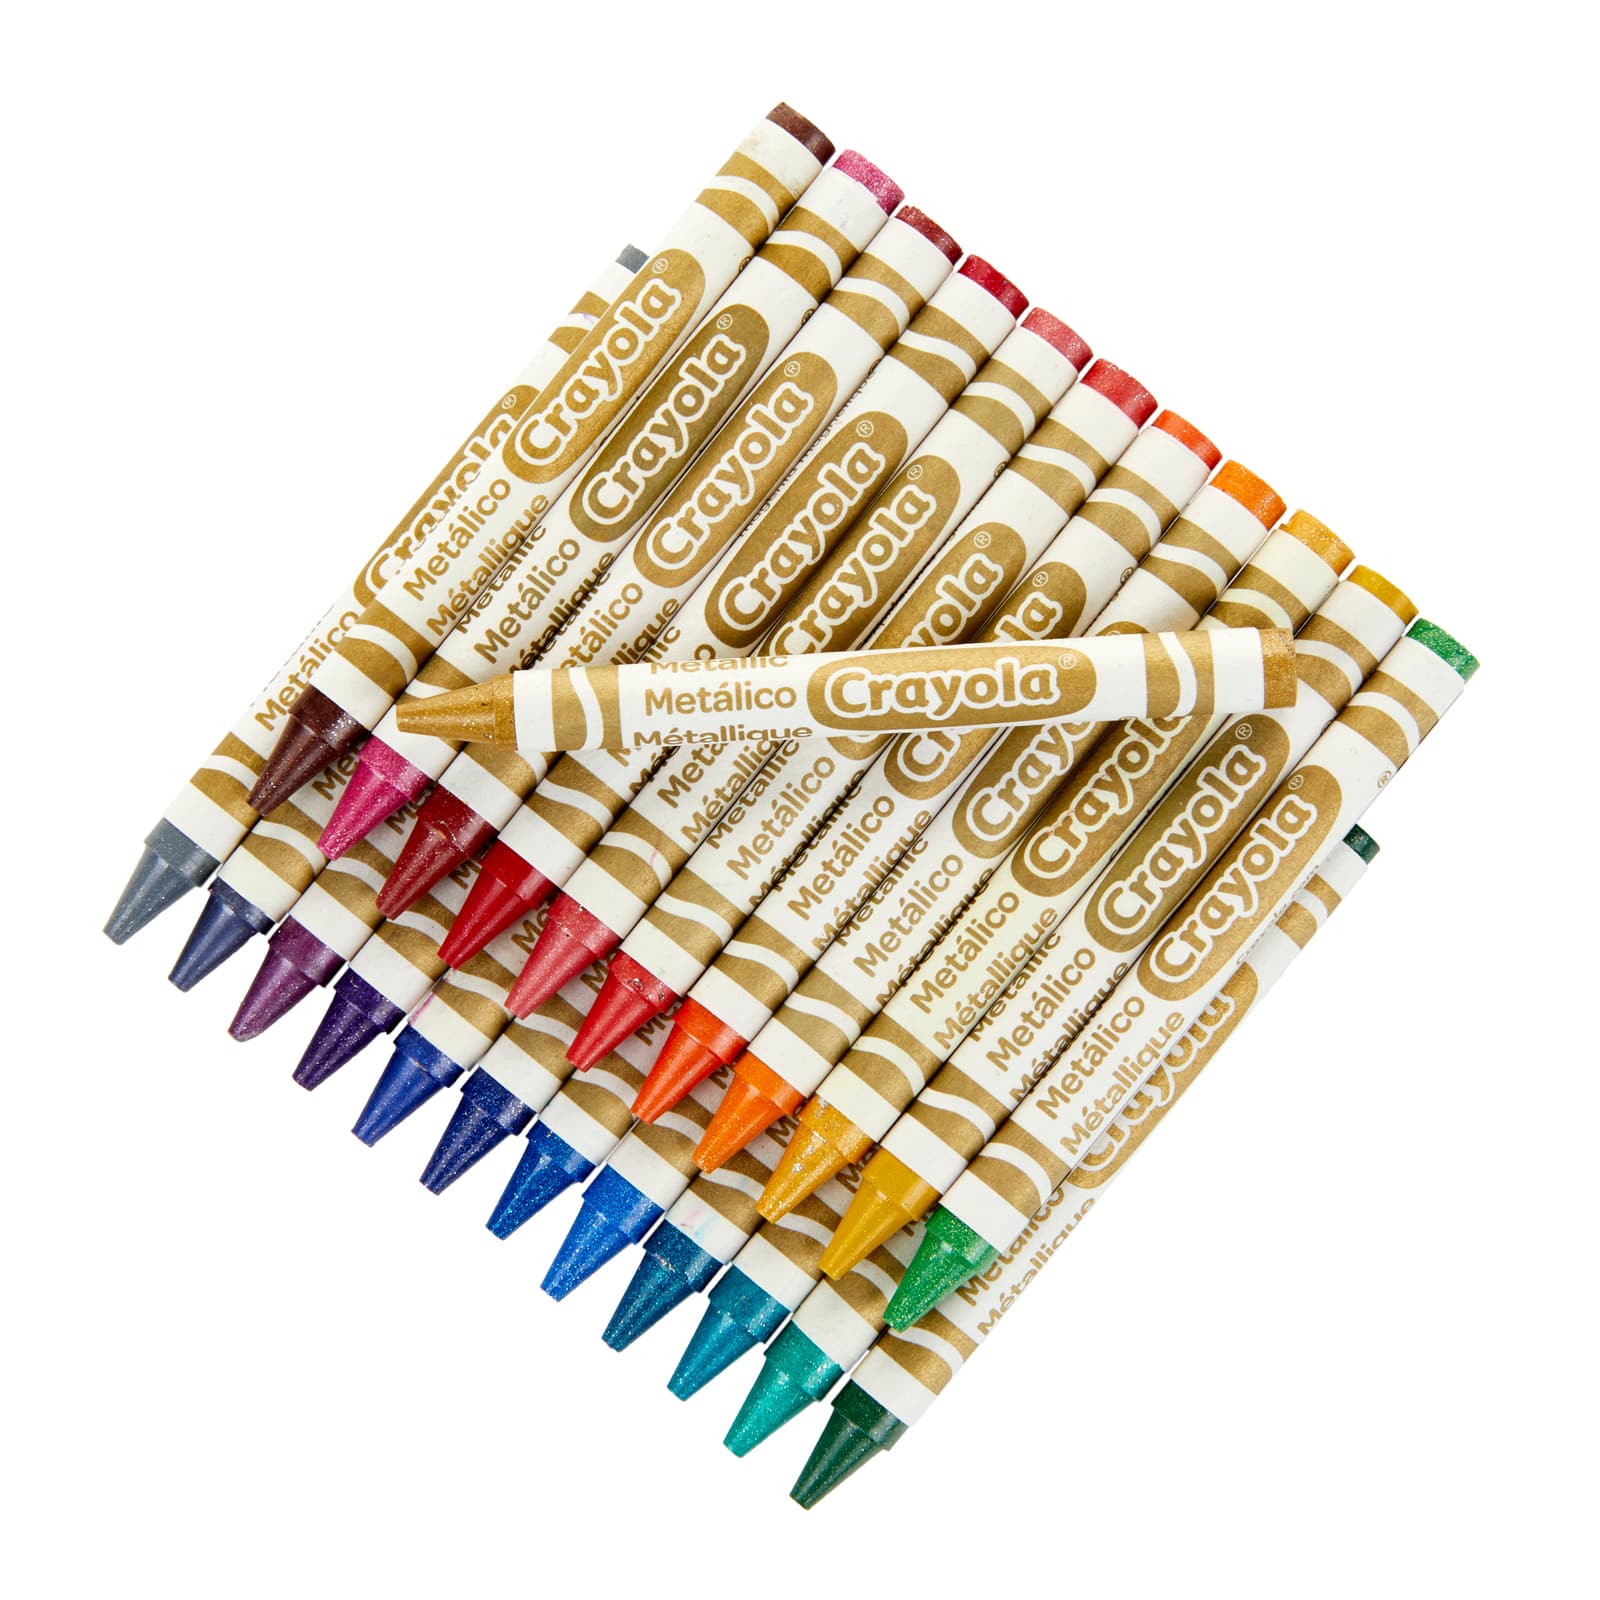 12 Packs: 24 ct. (288) Crayola&#xAE; Metallic Crayons